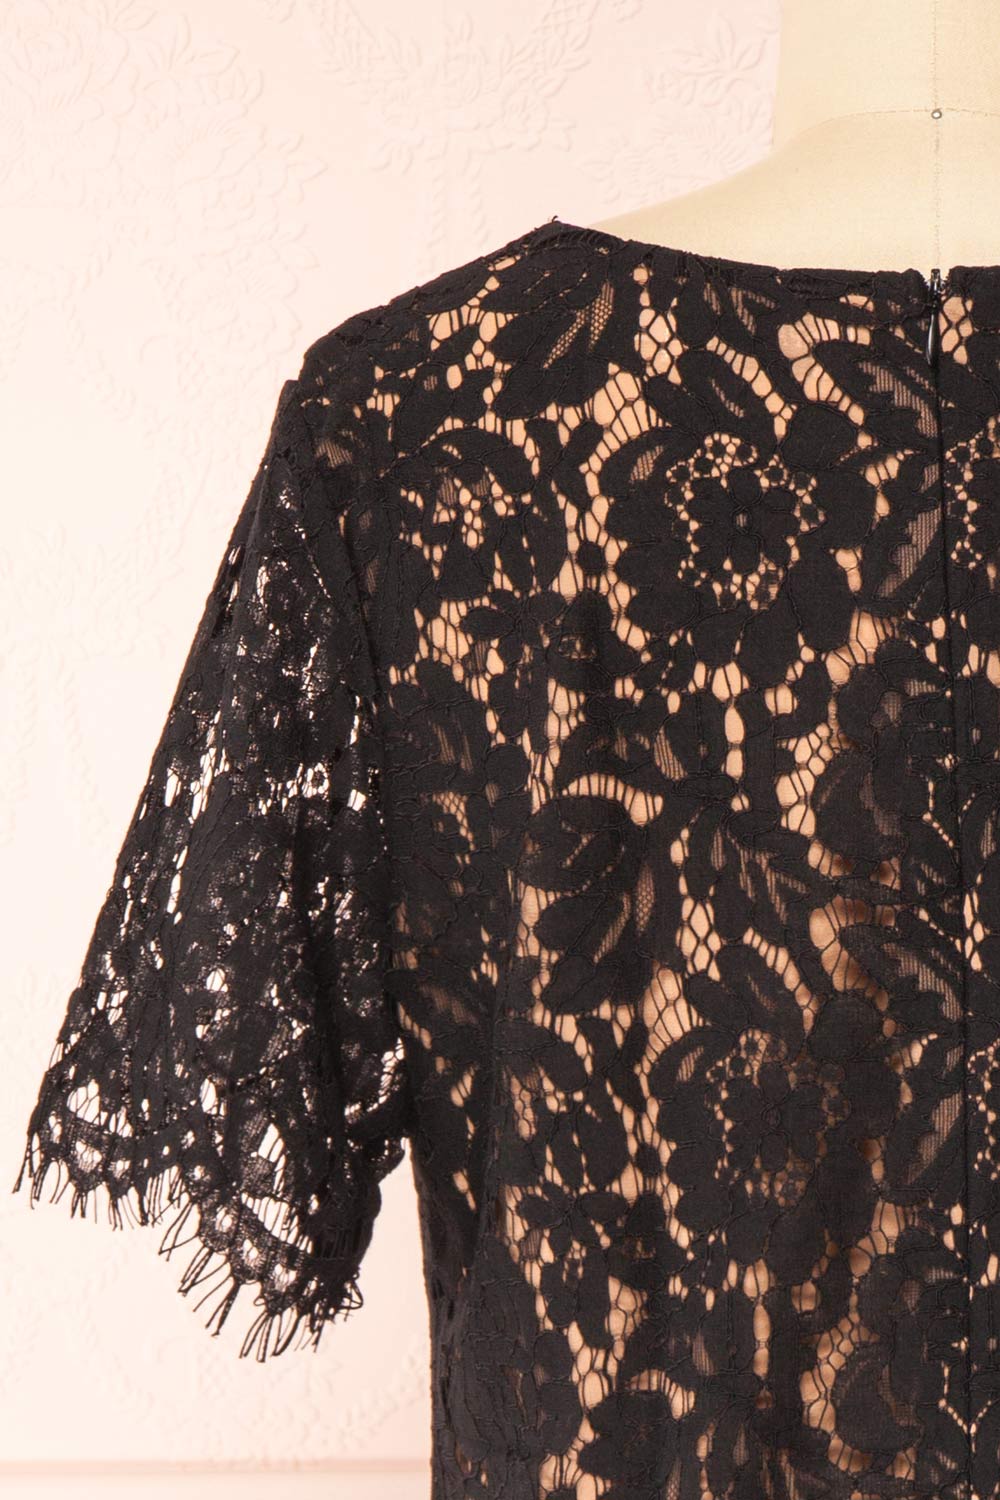 Apama Black Floral Lace Short Sleeve Dress | Boutique 1861 back close-up